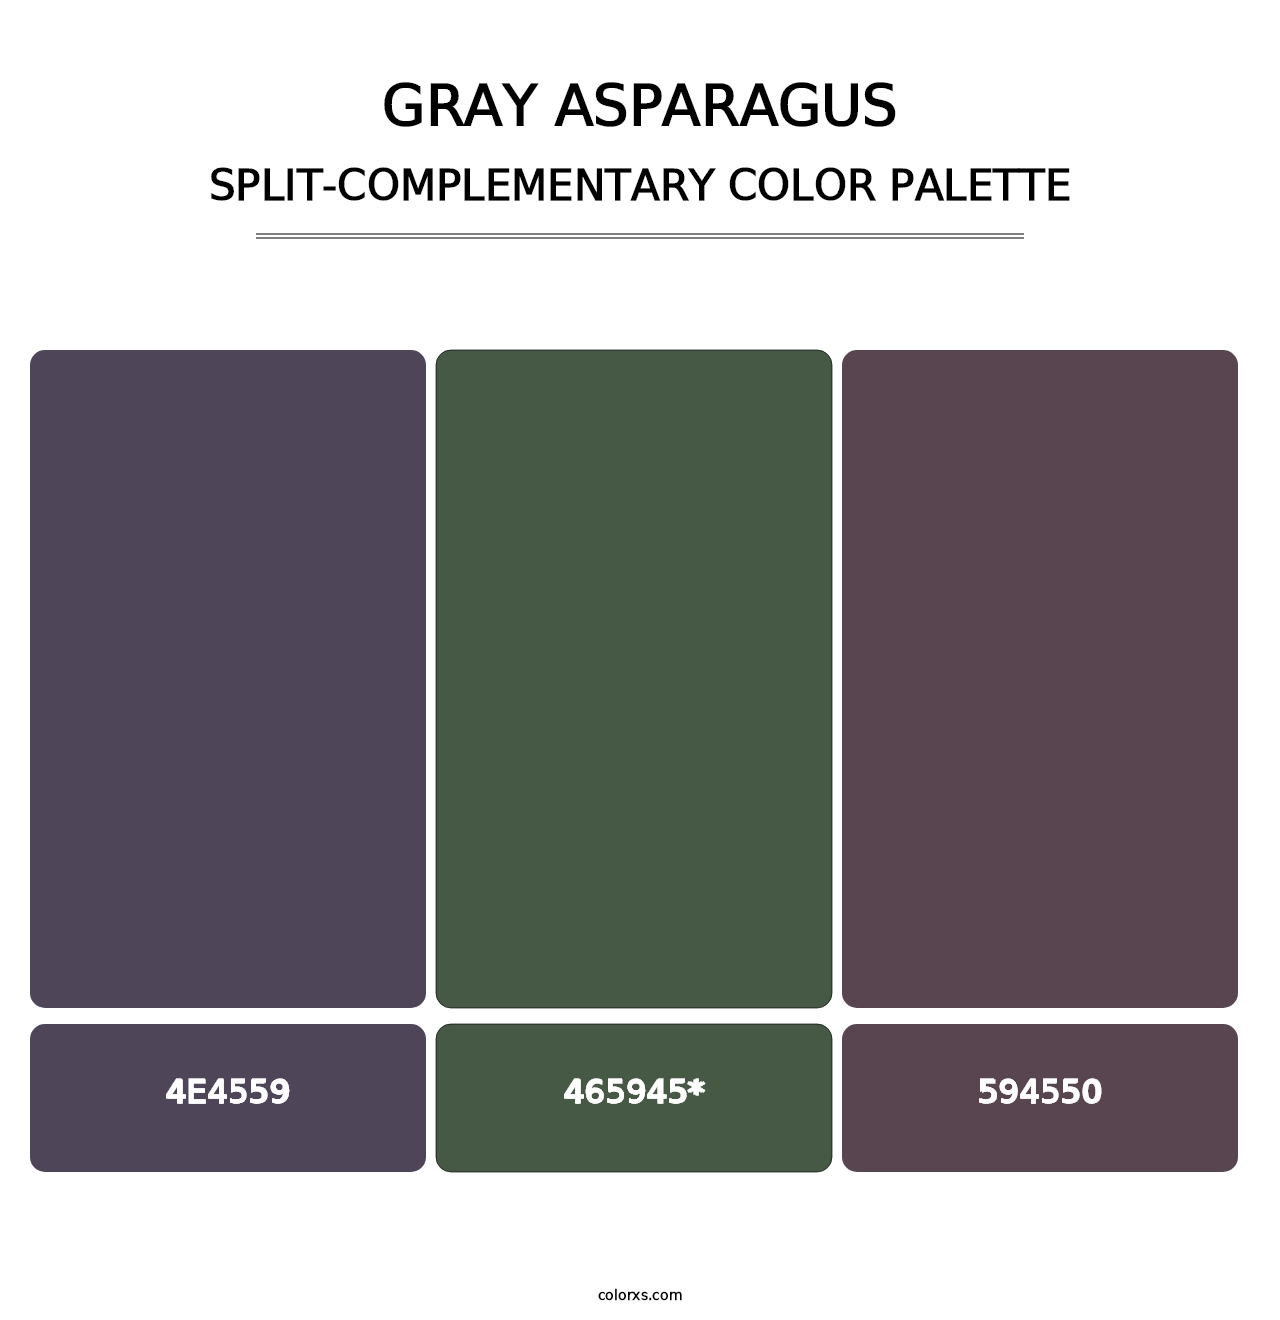 Gray Asparagus - Split-Complementary Color Palette